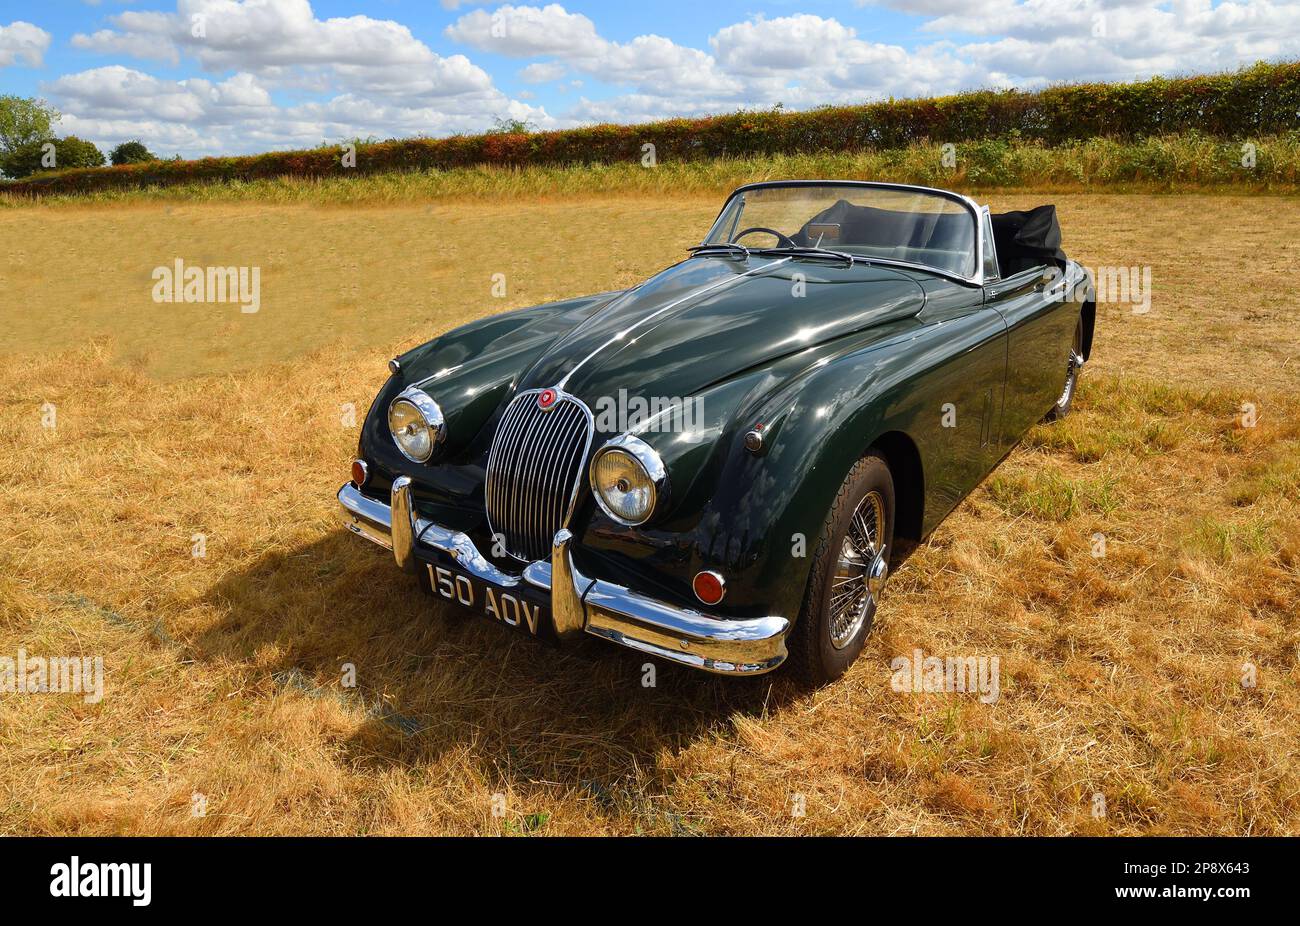 LITTLE GRANSDEN, CAMBRIDGESHIRE, ENGLAND – 28. AUGUST 2022: Klassisches Jaguar Coupé mit 1960 kg und absenkbarem Kopf, XK150 kg, parkt auf dem Feld. Stockfoto